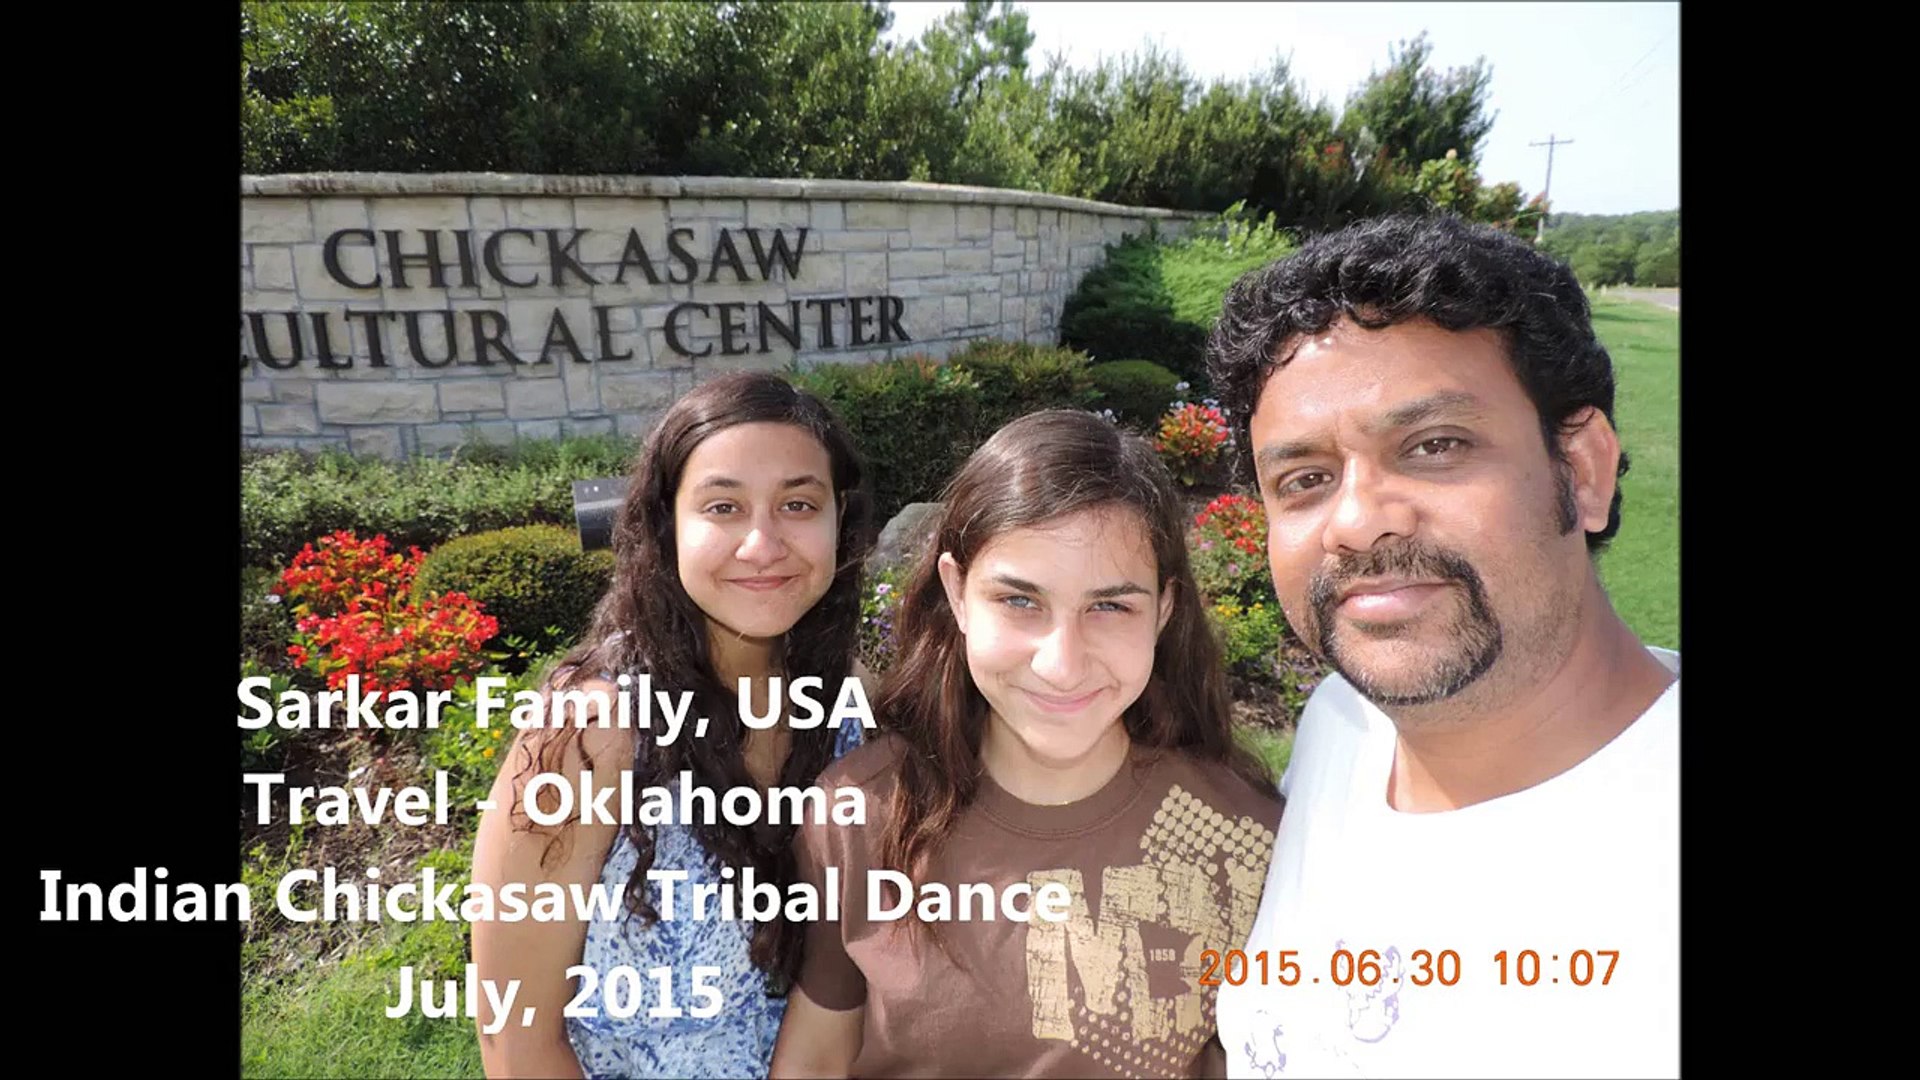 Sarkar Family, USA Travel Oklahoma Music Indian Chickasaw Tribal Dance July 2015